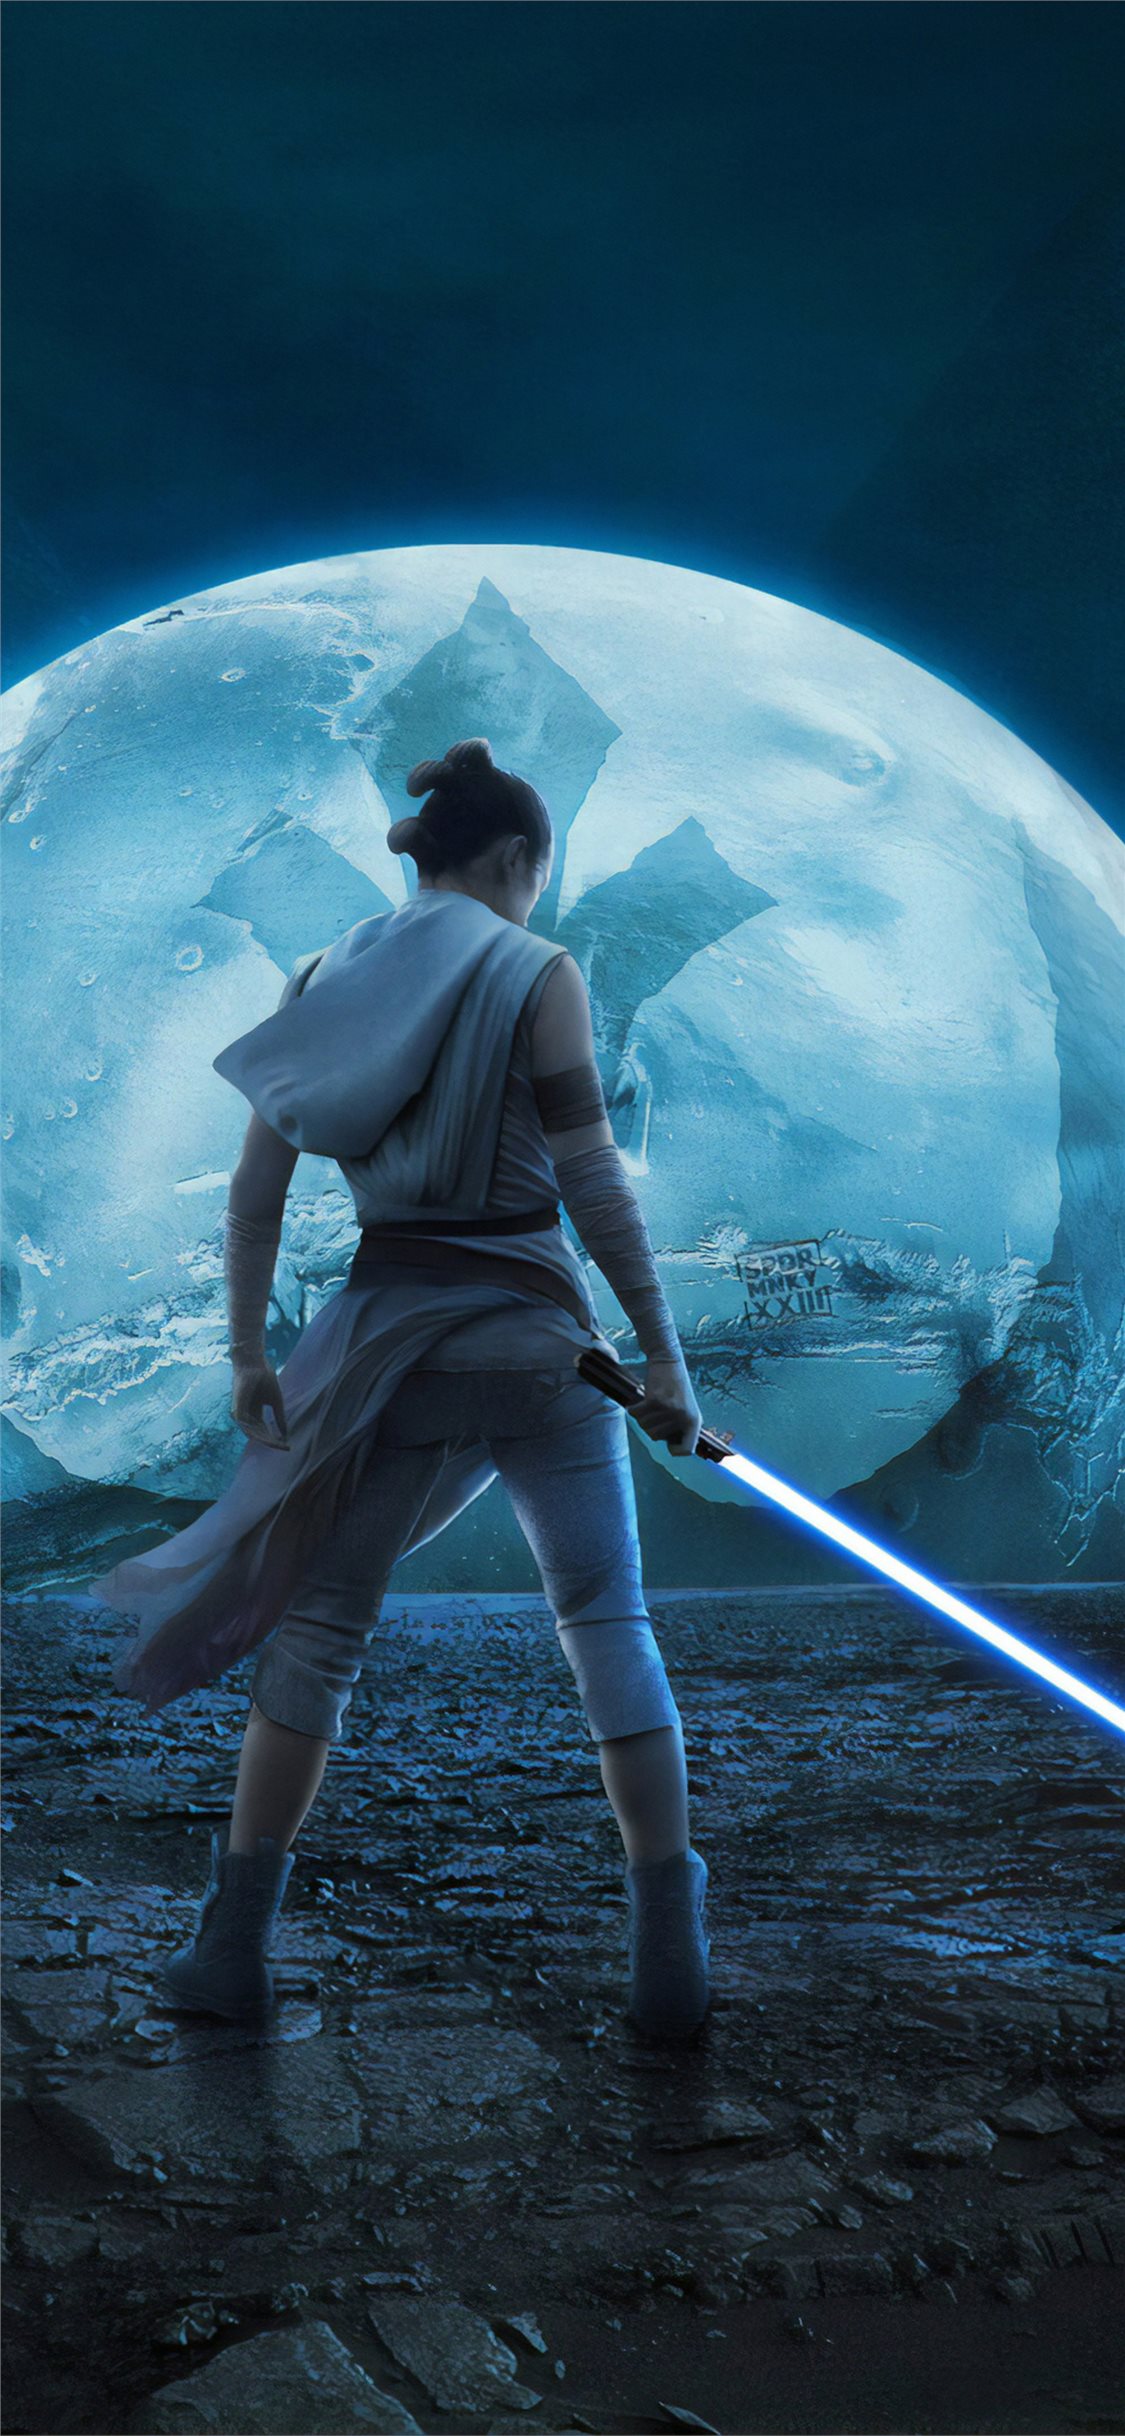 Star Wars: The Rise of Skywalker free downloads